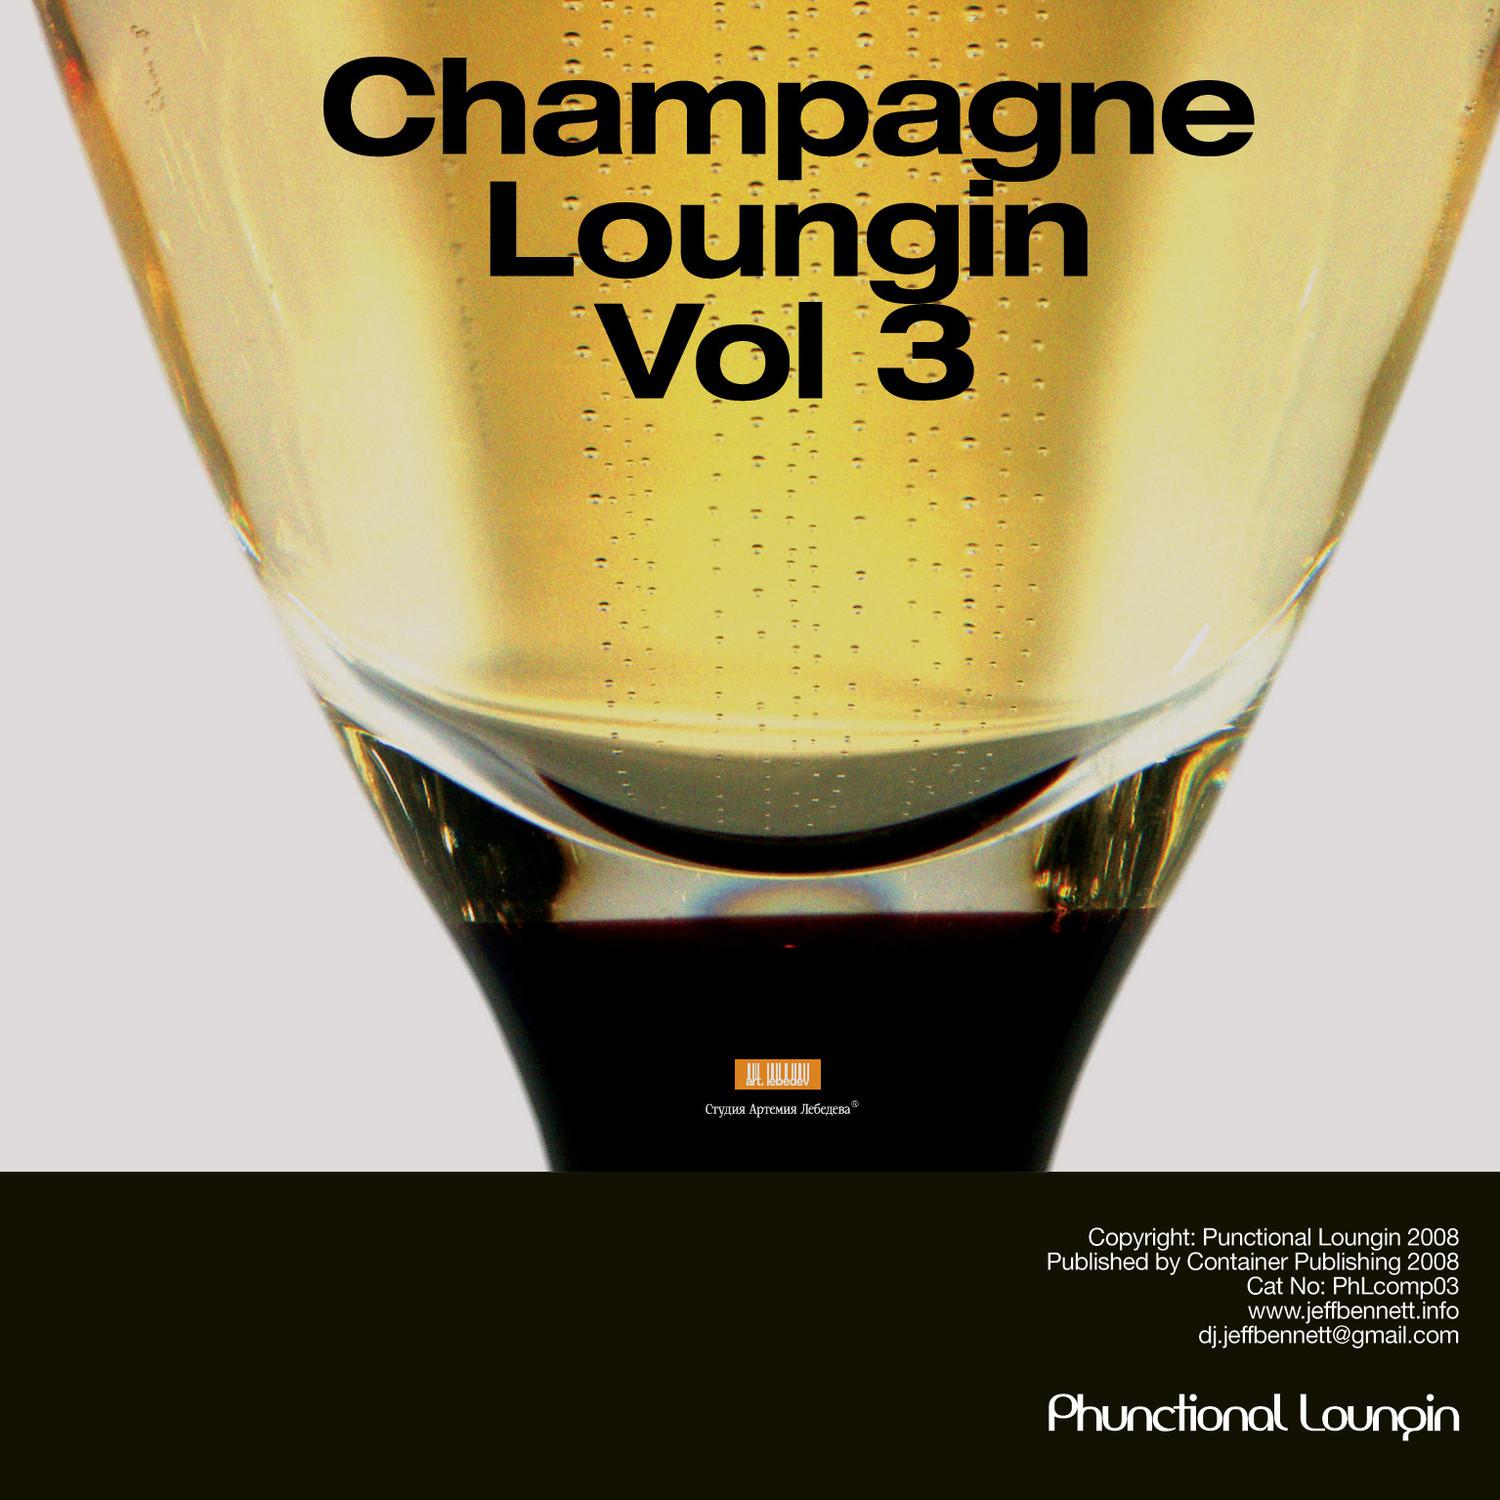 Champagne Loungin vol 3